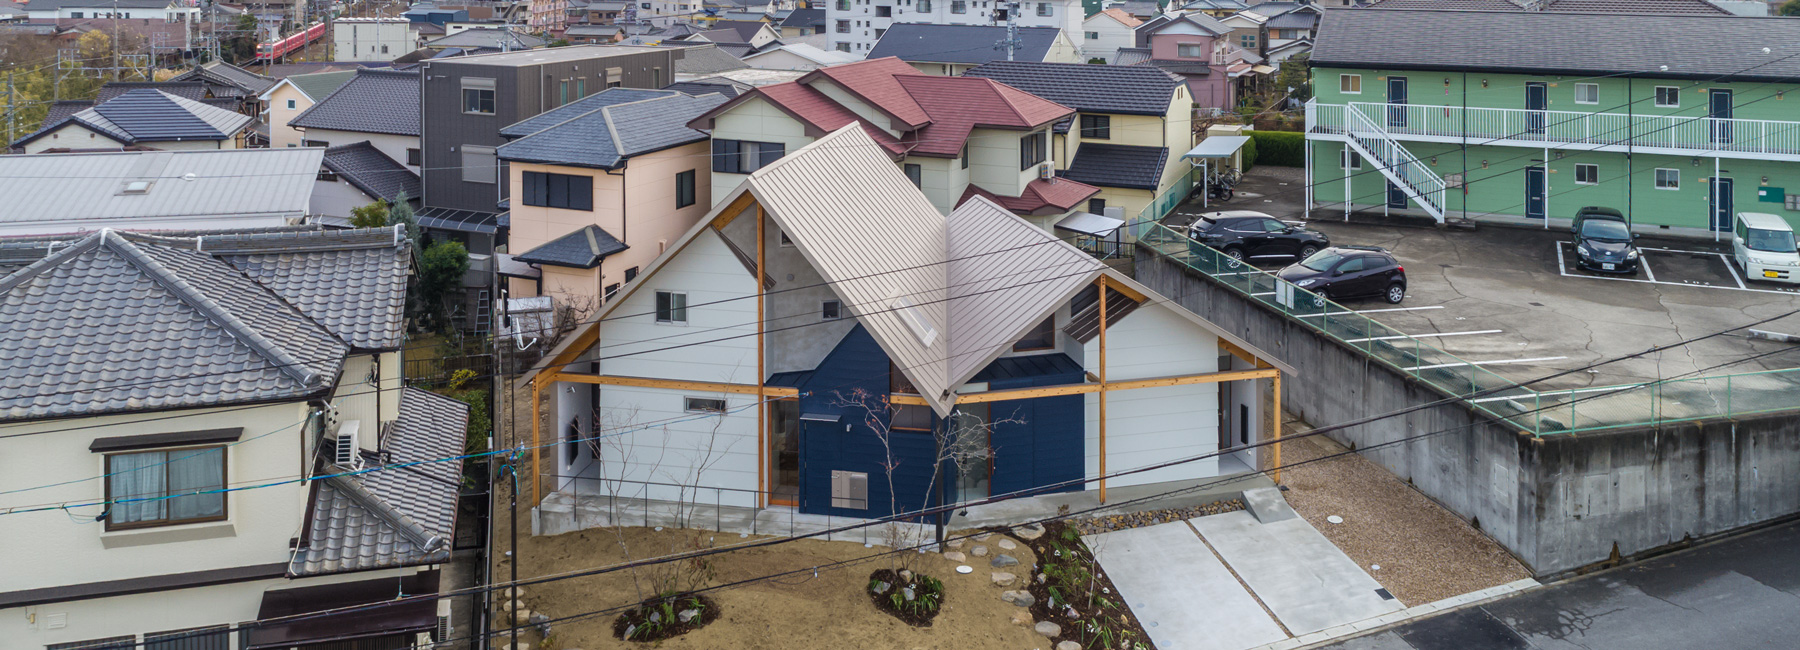 maki yoshimura frames two-volume house in japan with timber truss skeleton